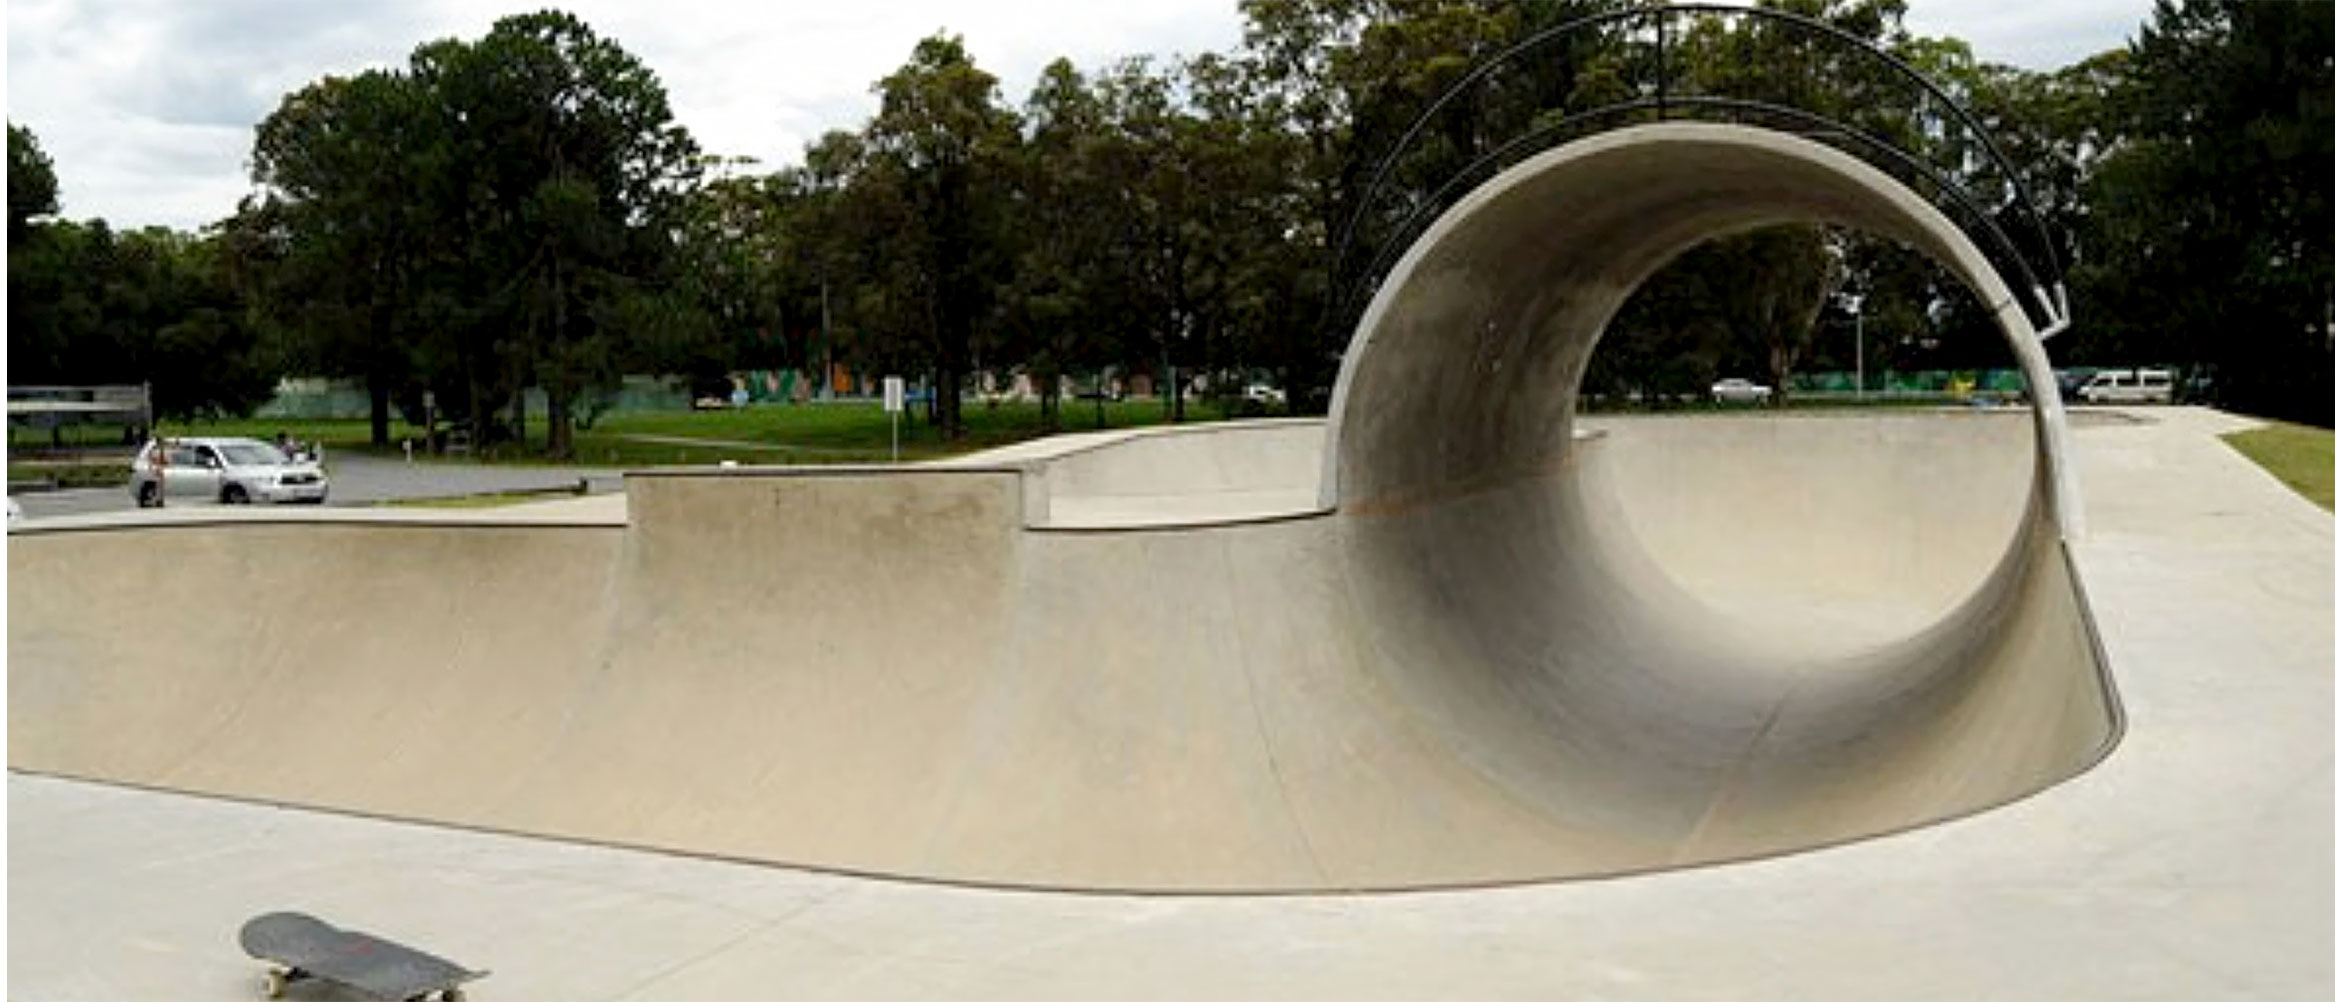 Elanora skate park, Concrete Skateparks build